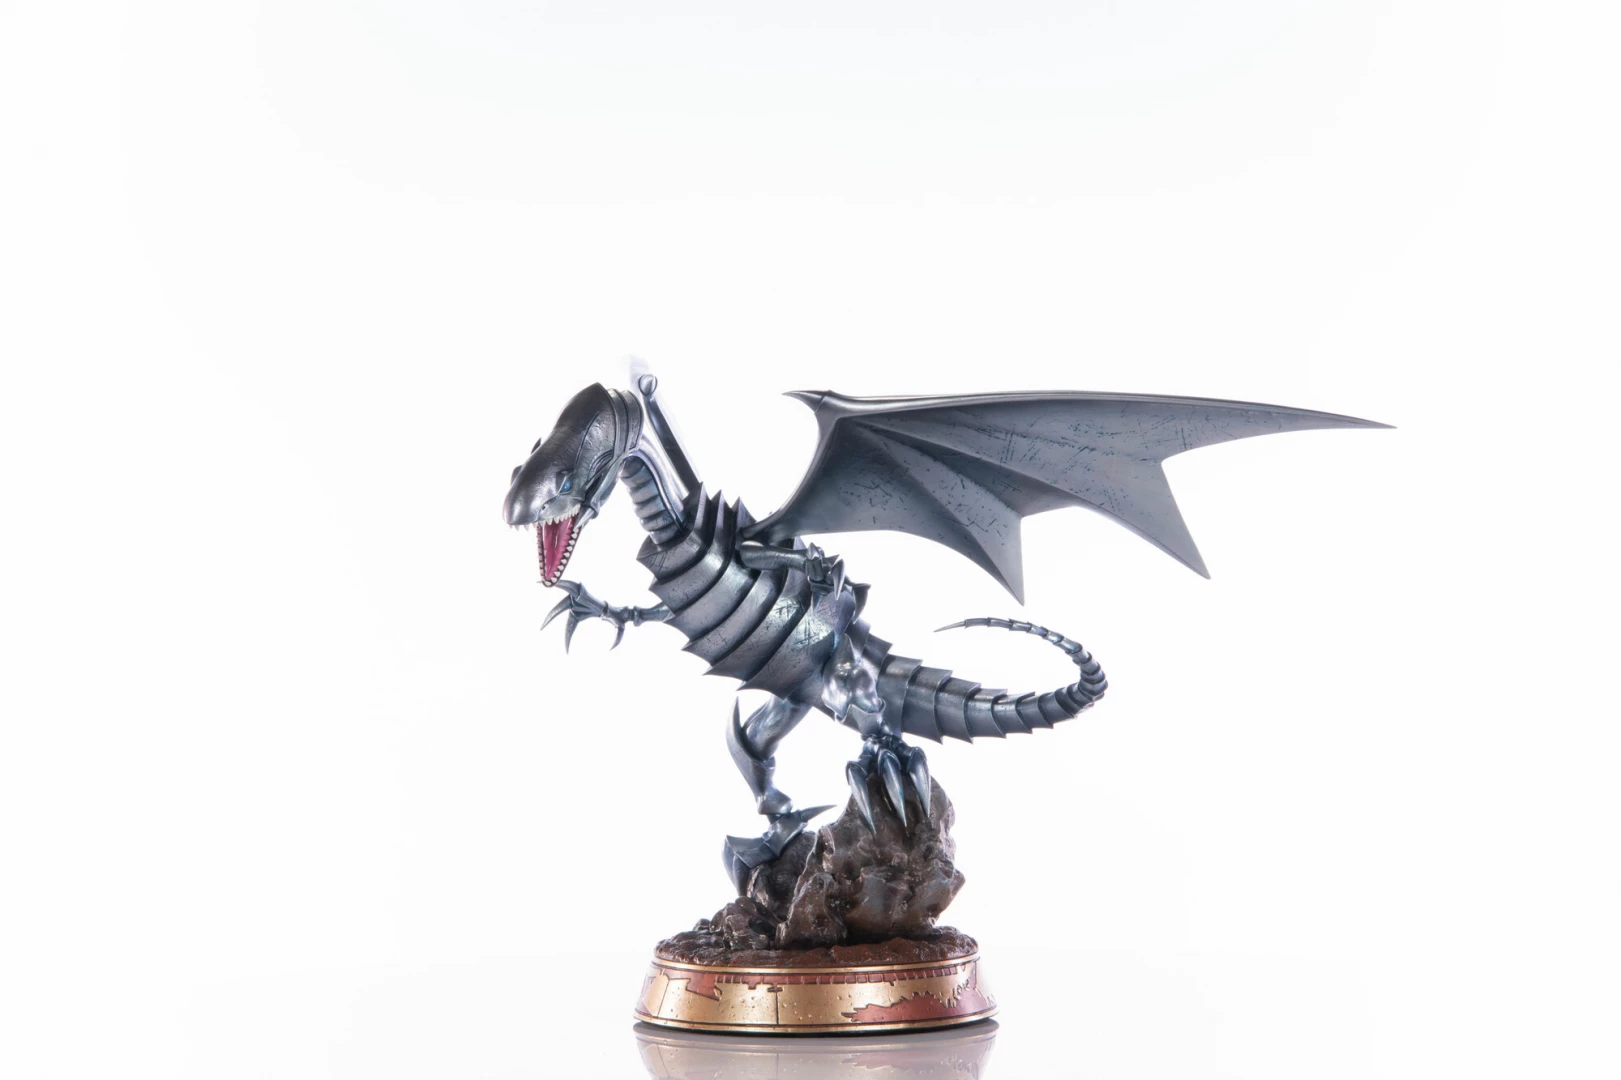 Yu-Gi-Oh! Blue-Eyes White Dragon Silver Edition PVC Statue voor de Merchandise kopen op nedgame.nl